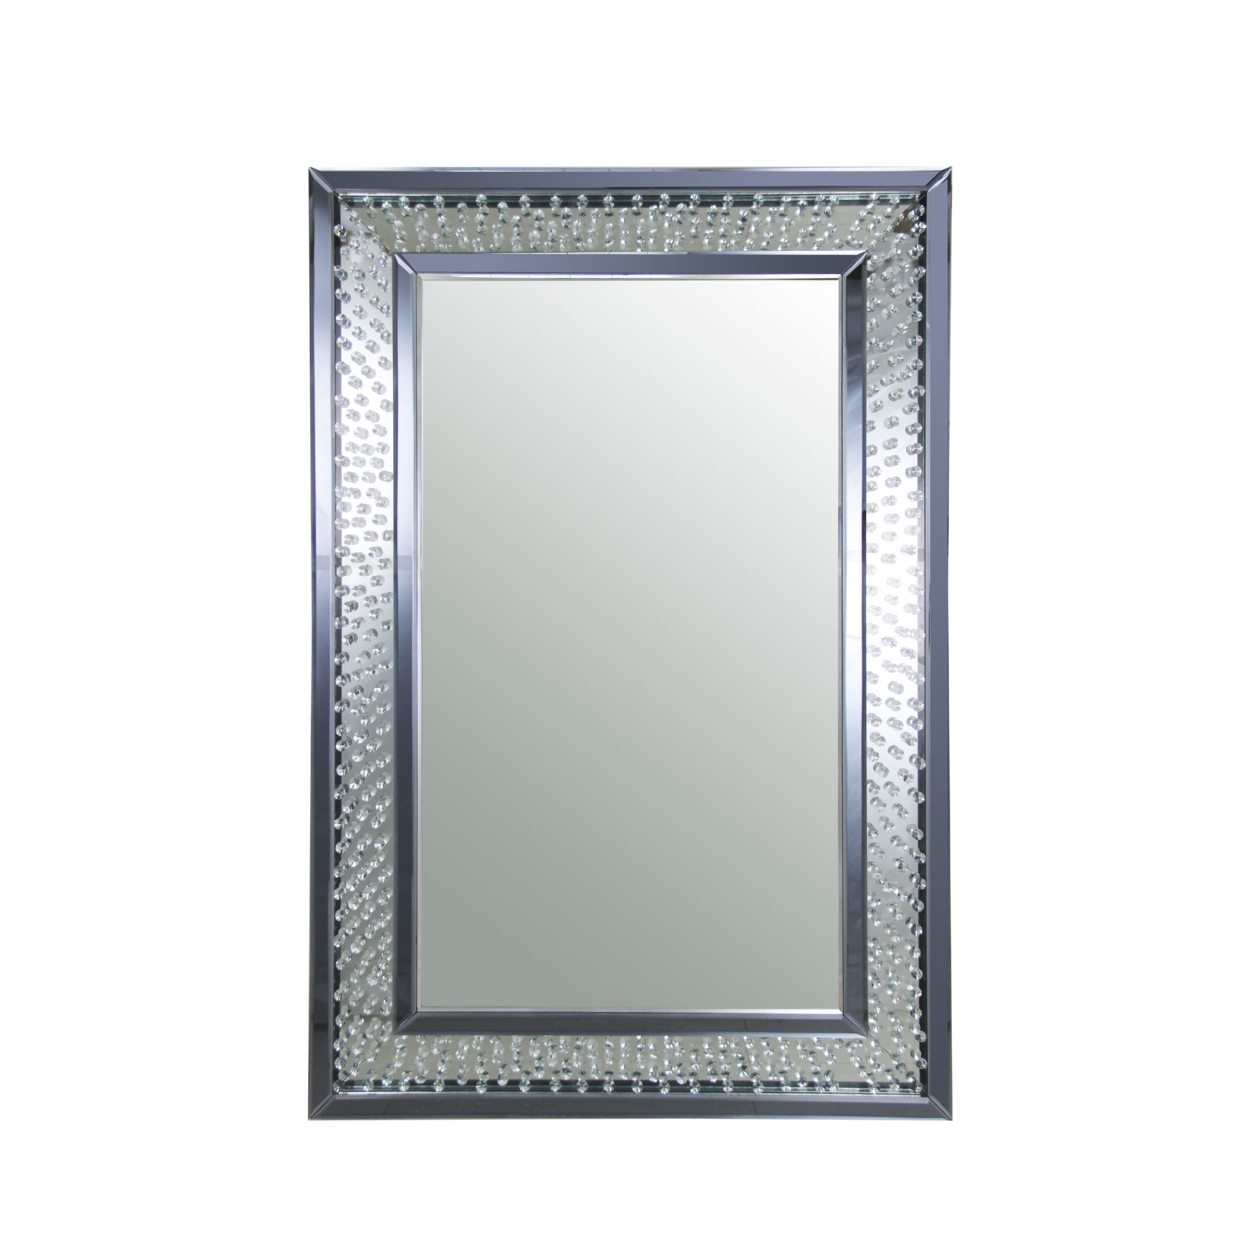 Rectangular Wall Accent Mirror With Crystal Insert Frame, Silver- Saltoro Sherpi